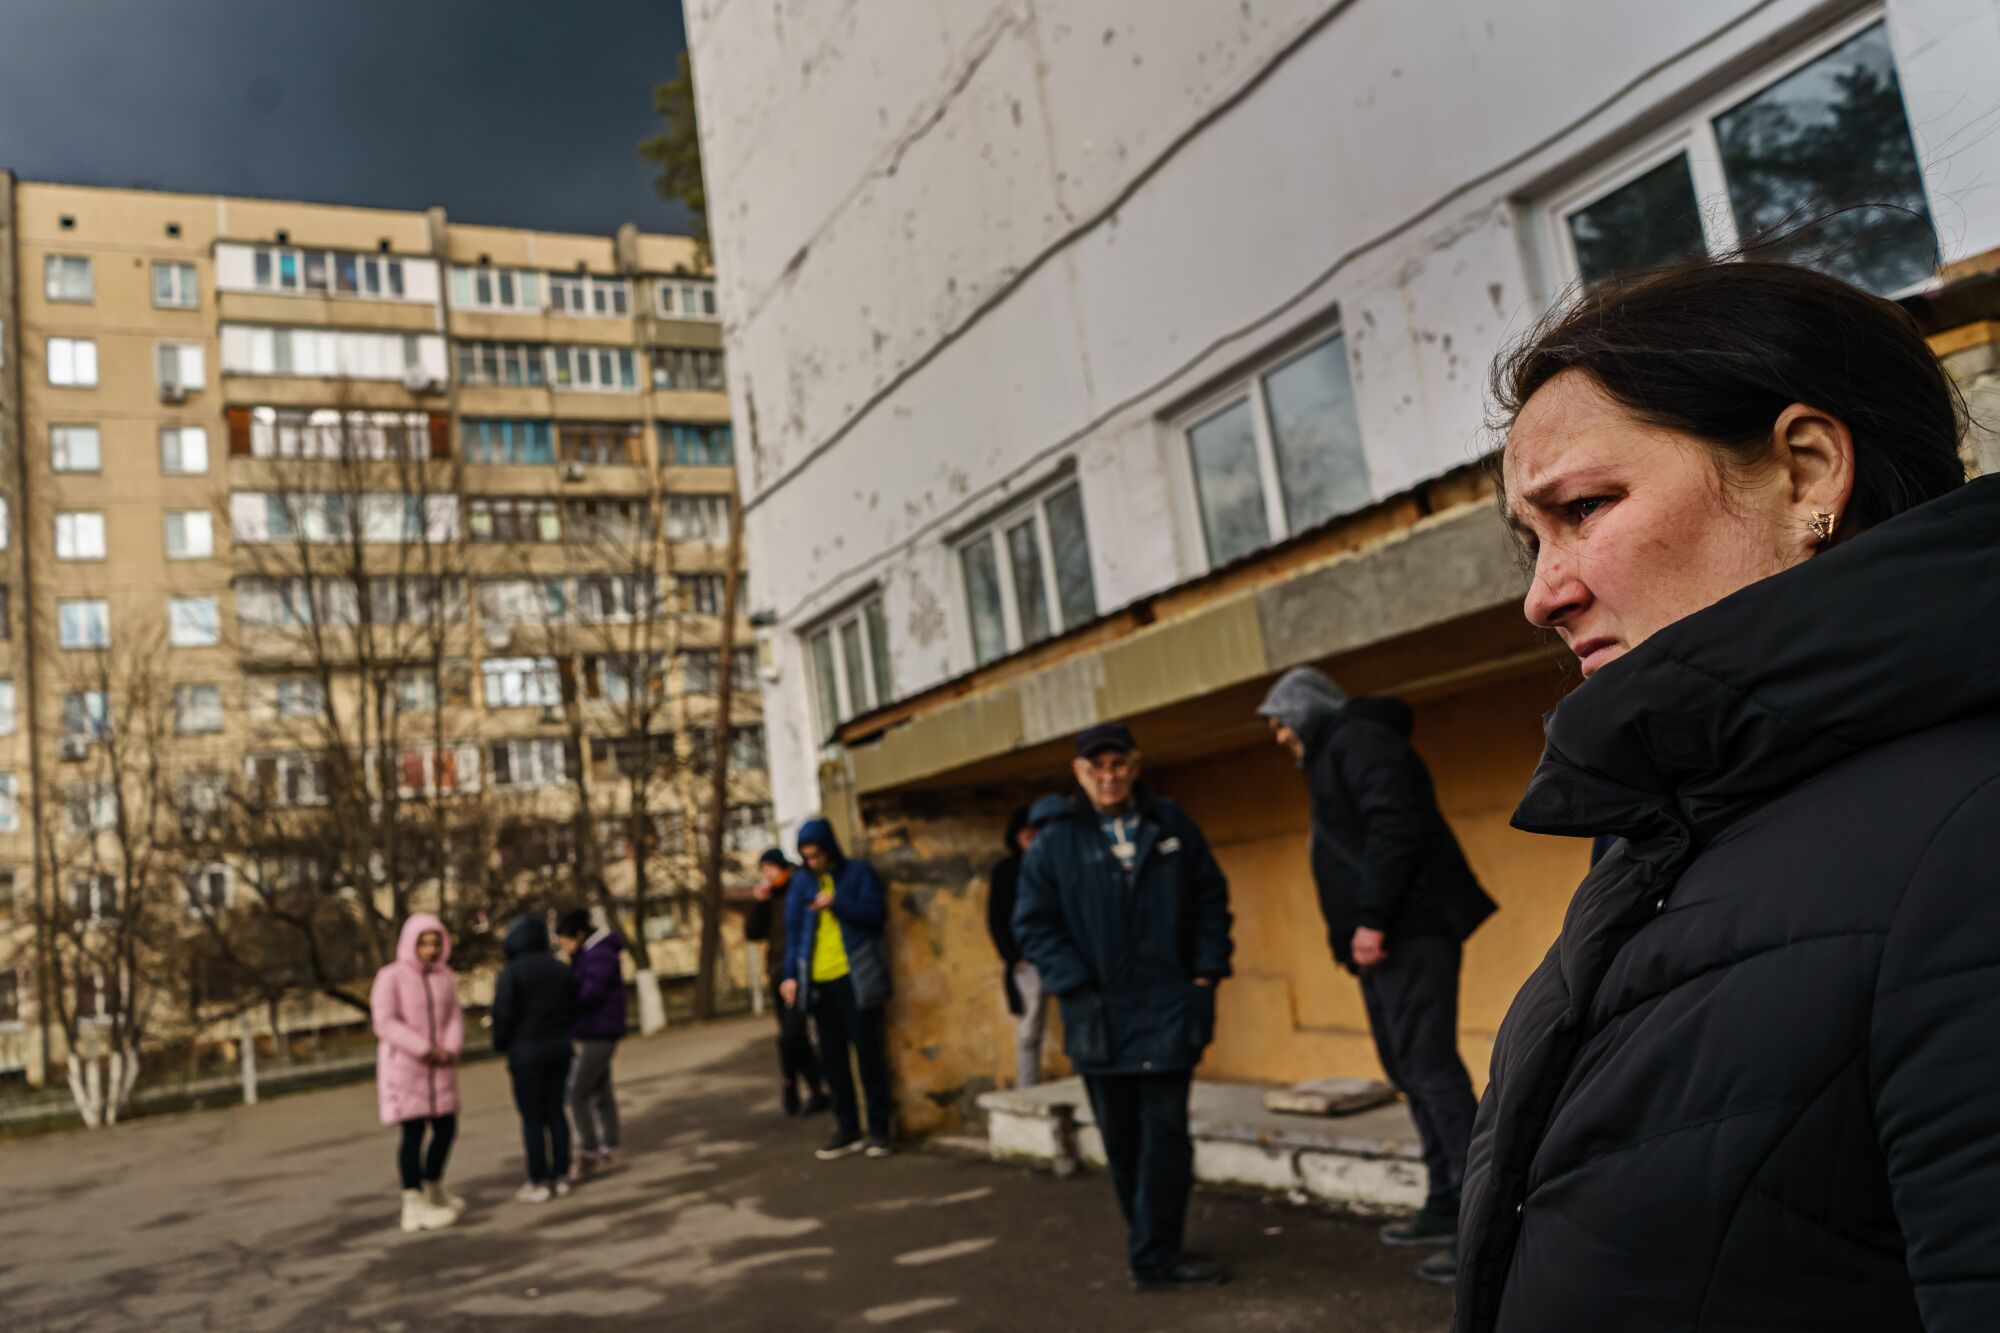 Natalia Mamalyga and others wait outside a building